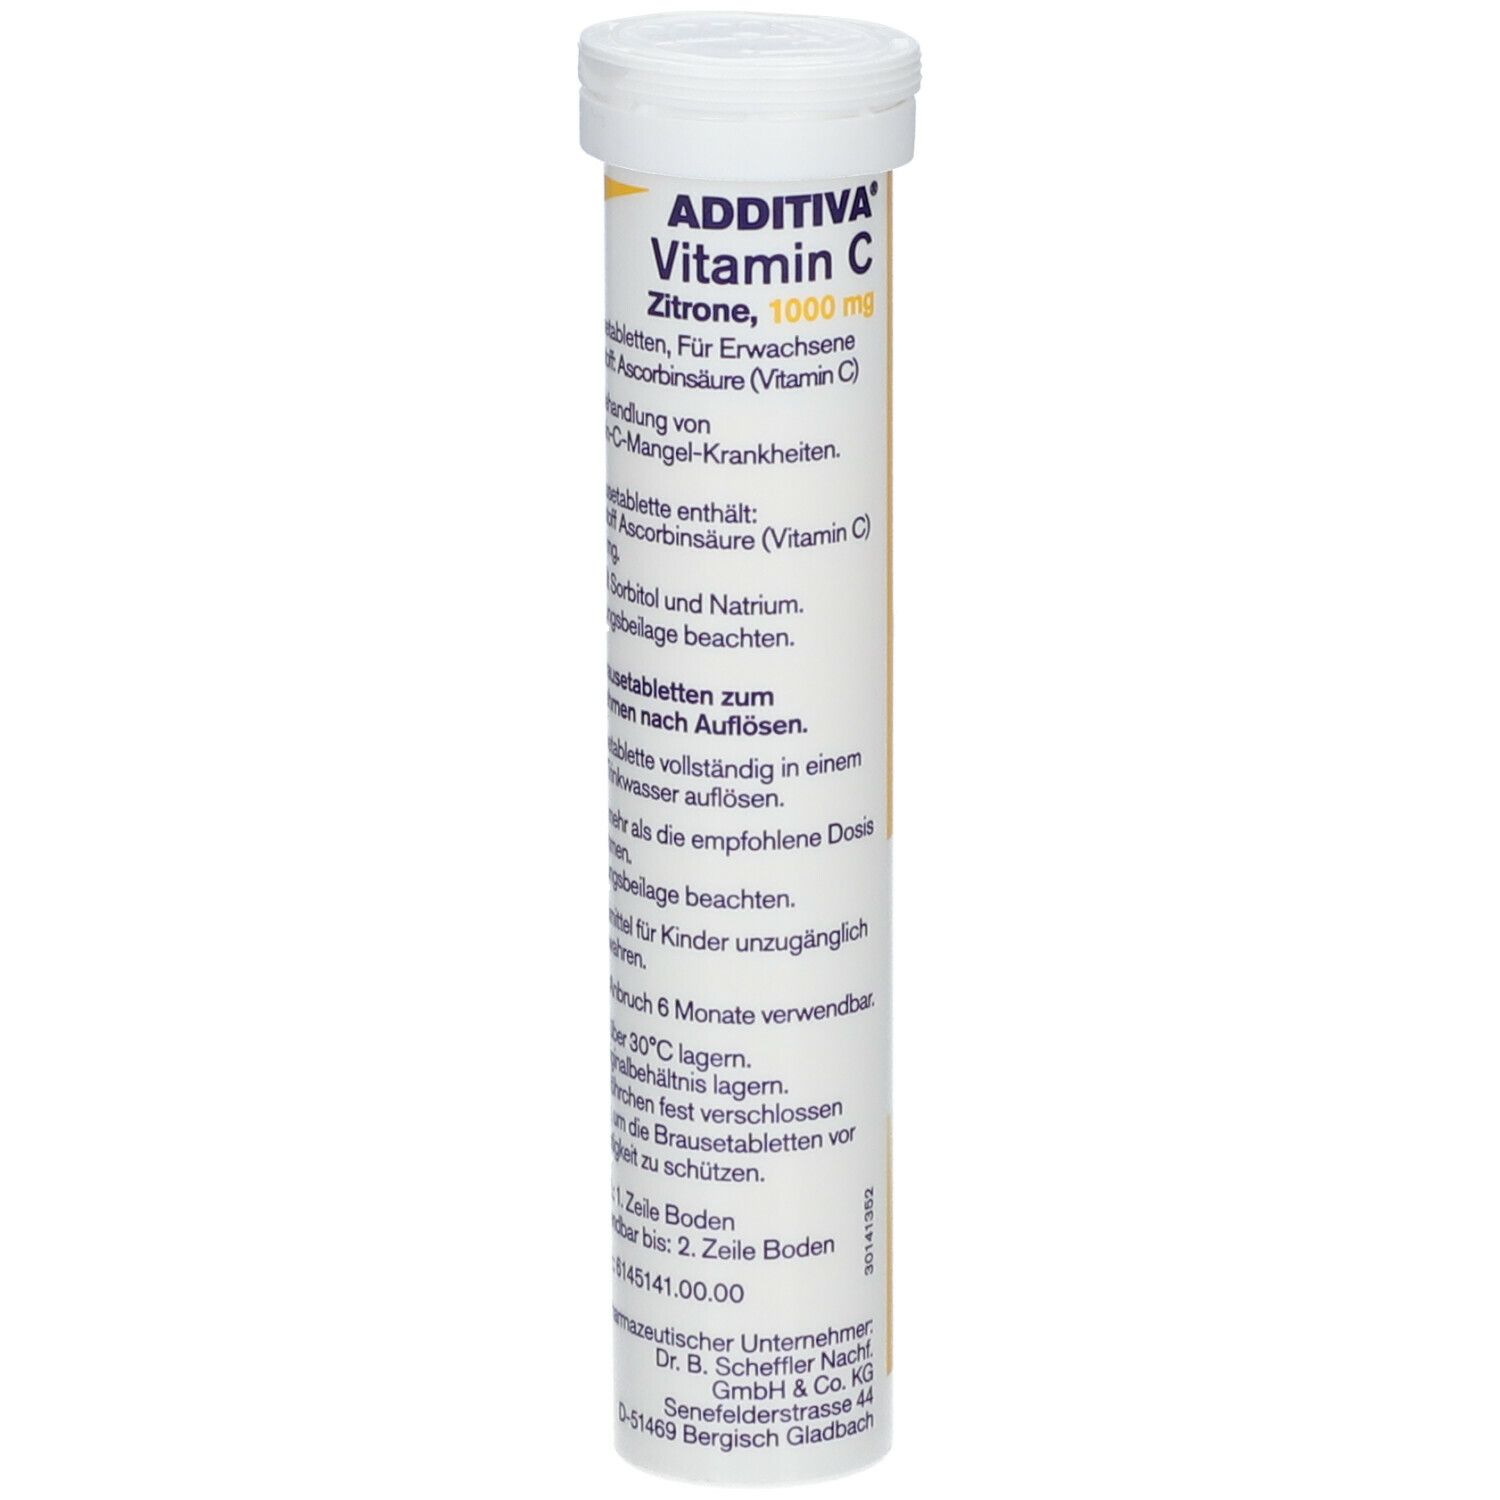 Additiva Vitamin C 1 g Brausetabletten